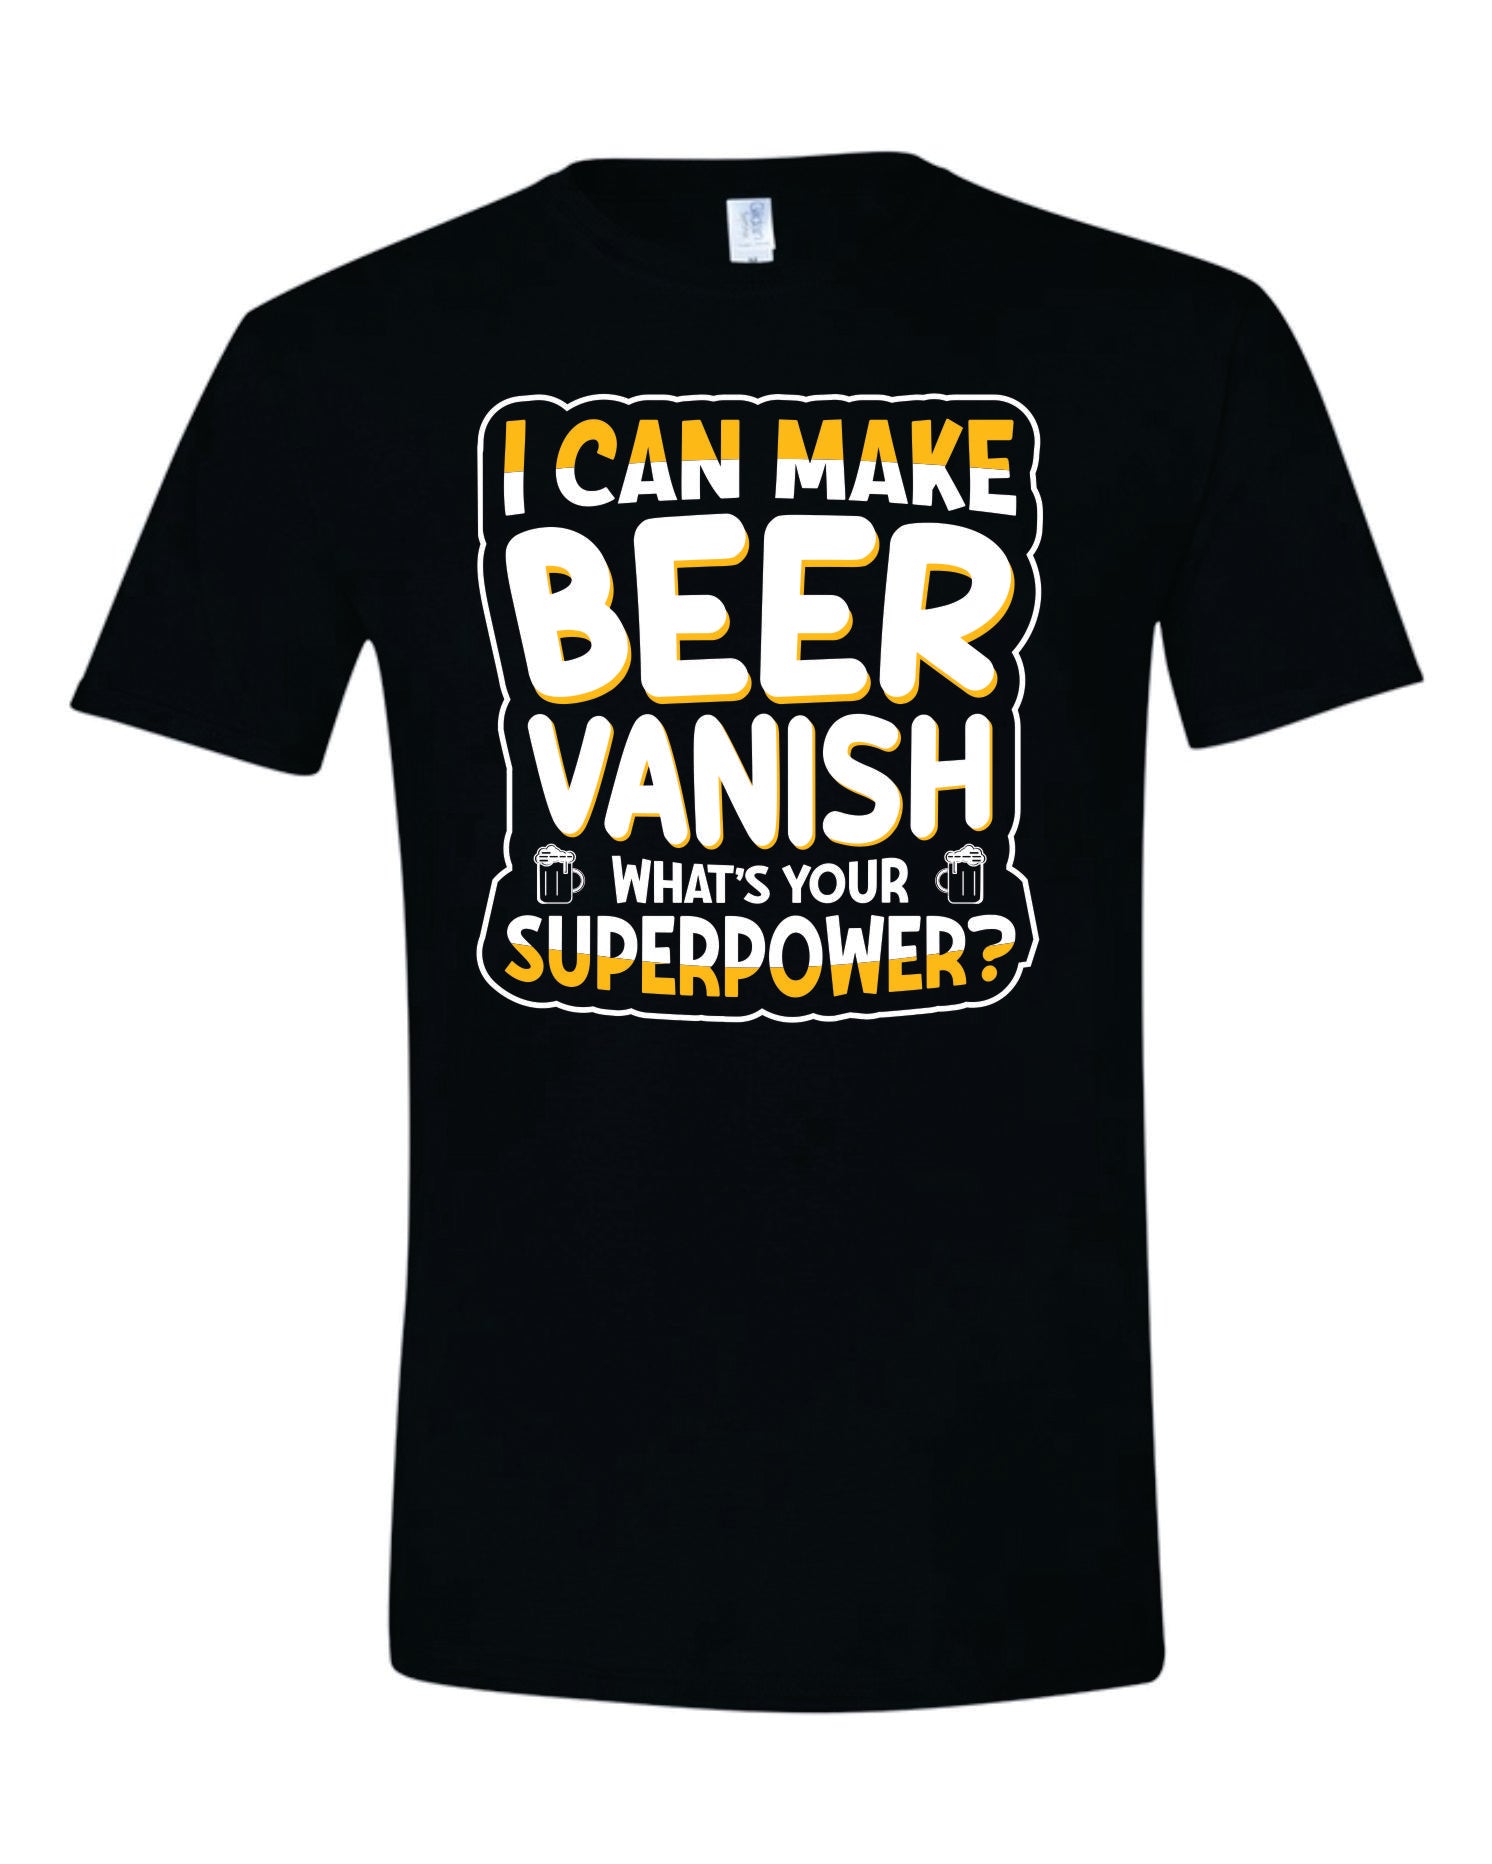 Beer Vanish Superpower - Funny Beer Enthusiast T-Shirt